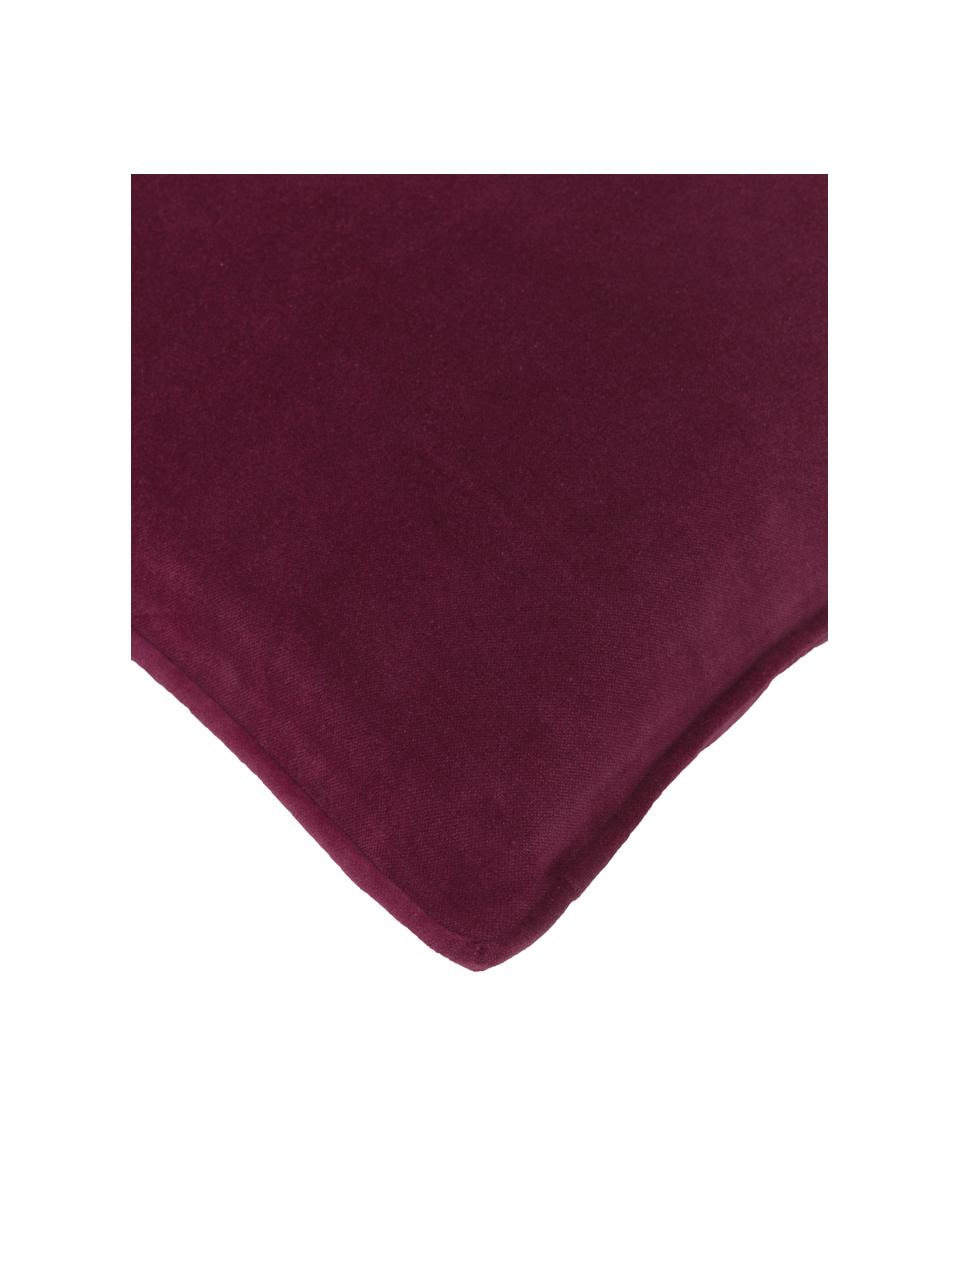 Funda de cojín de terciopelo Dana, 100% terciopelo de algodón, Rojo vino, An 30 x L 50 cm